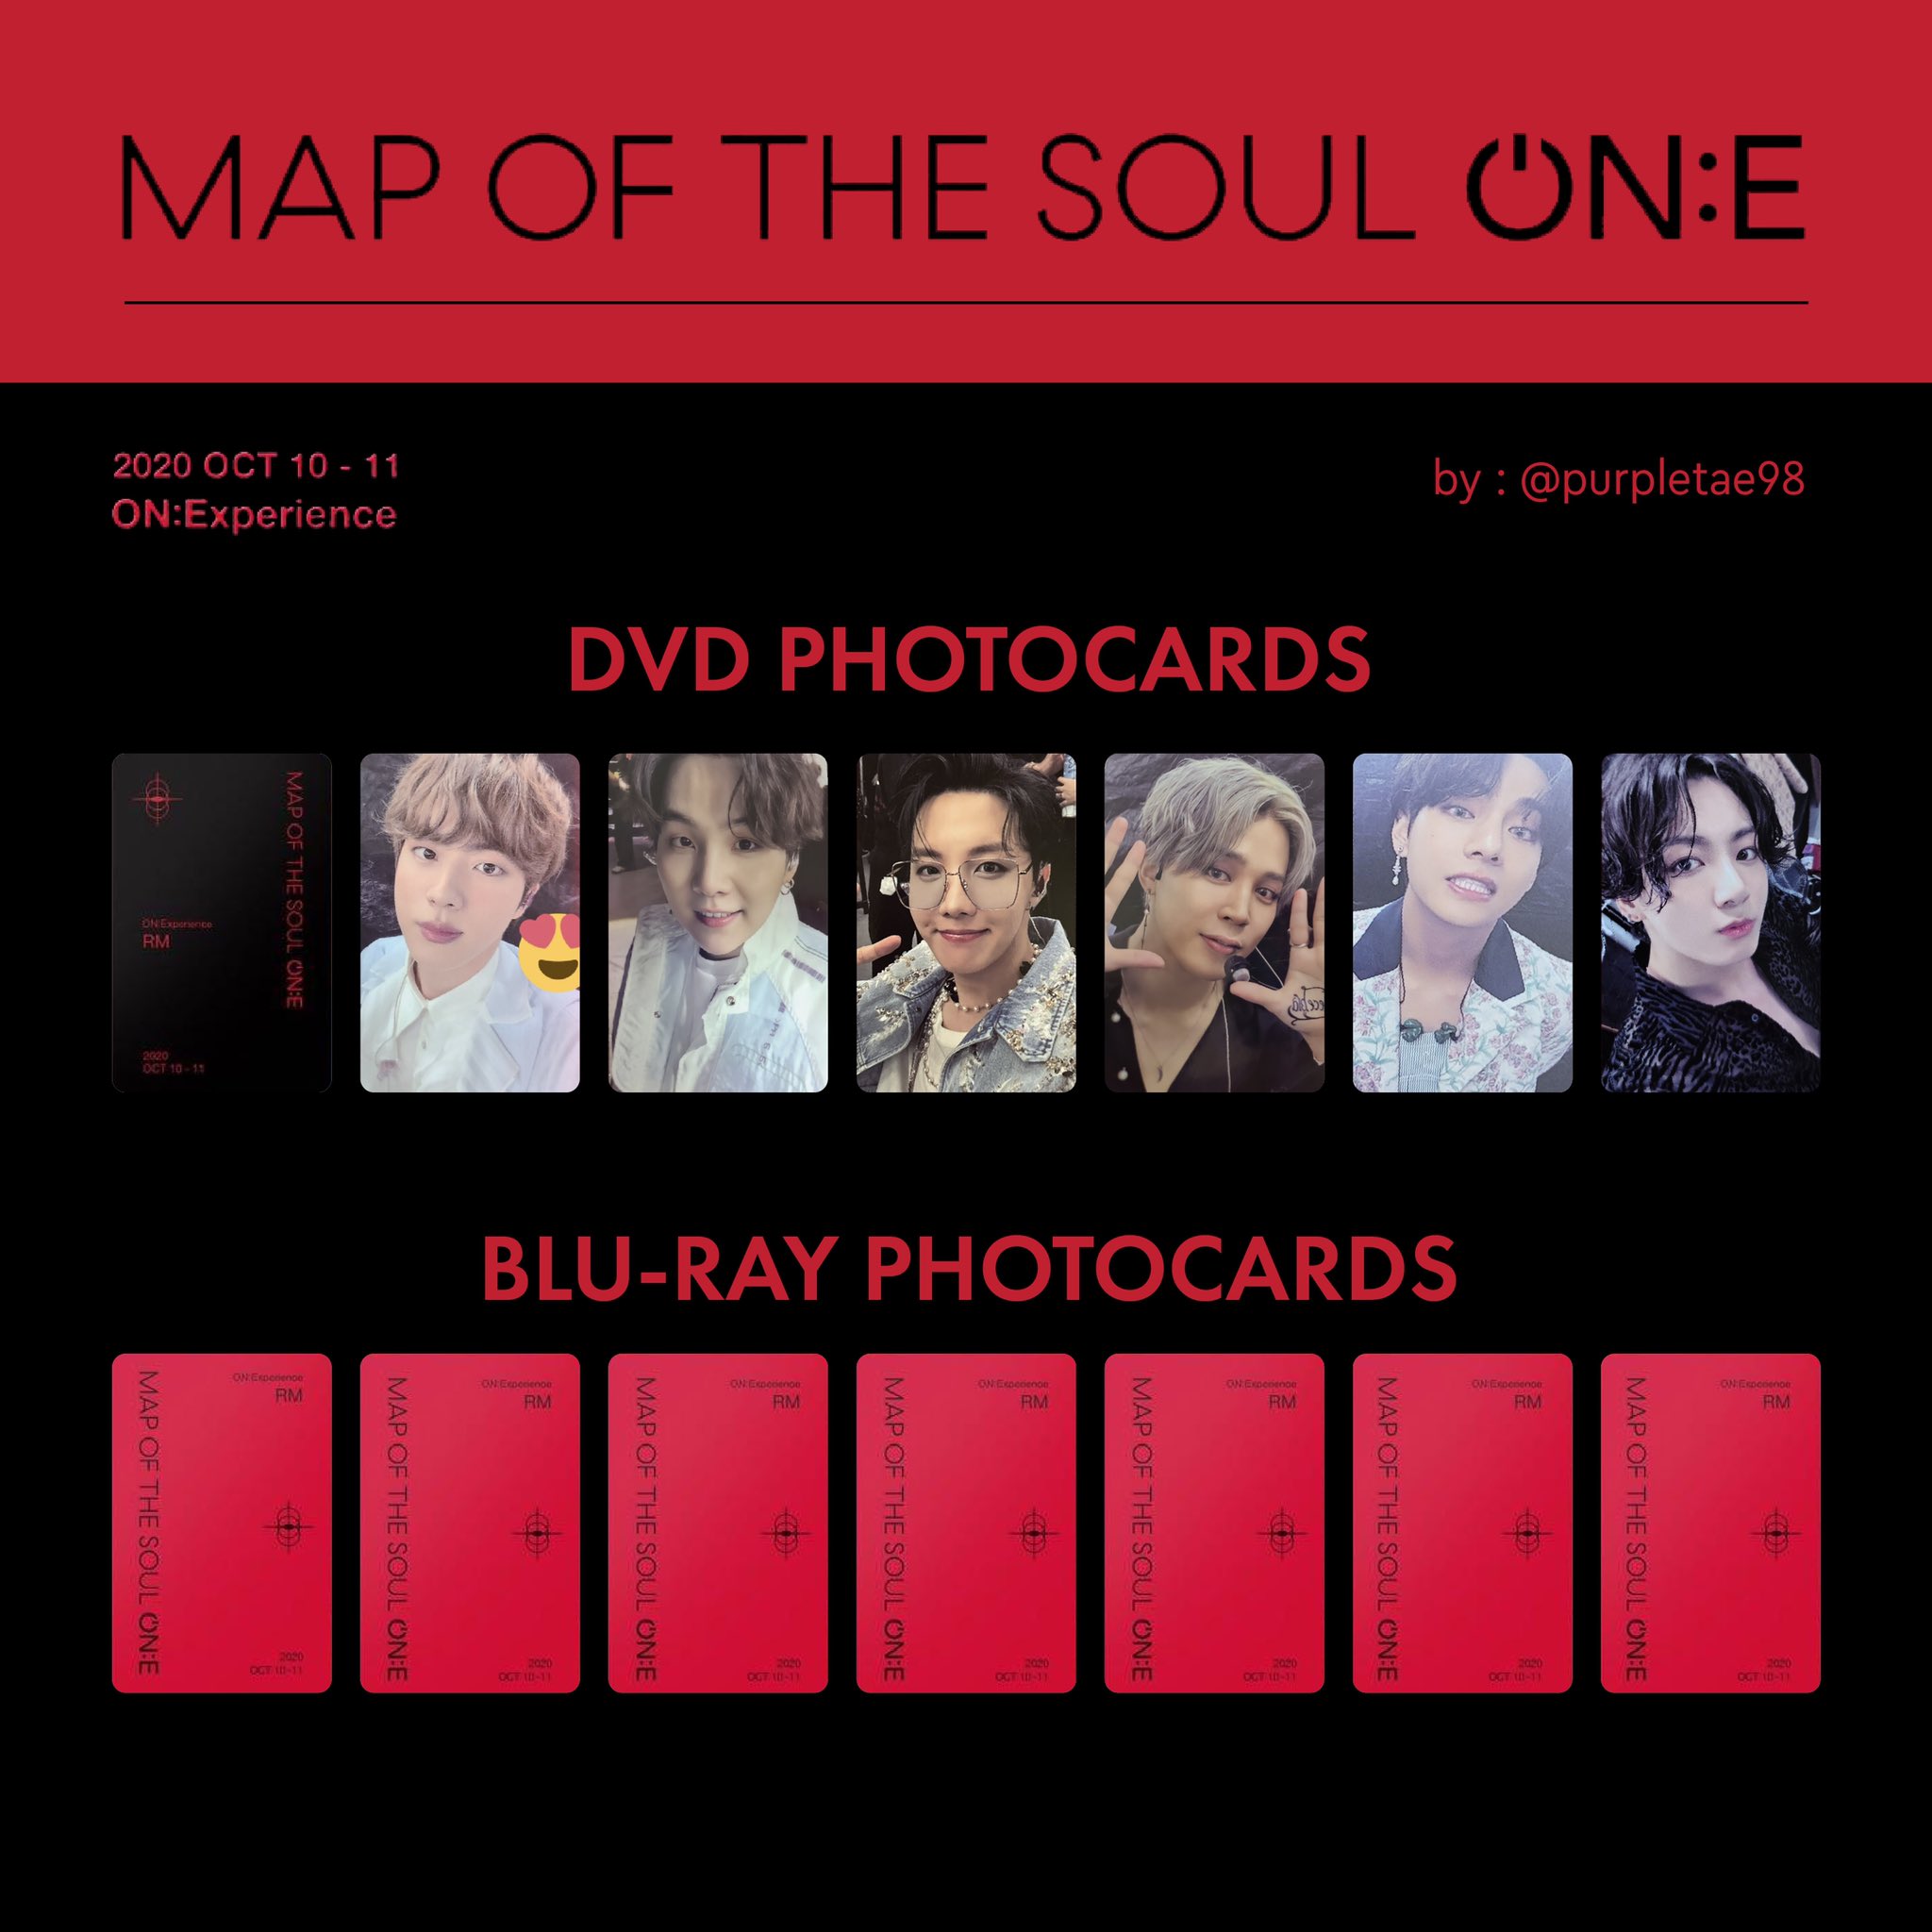 即日発送 the of map bts soul Jin DVD blu-ray on:e - CD